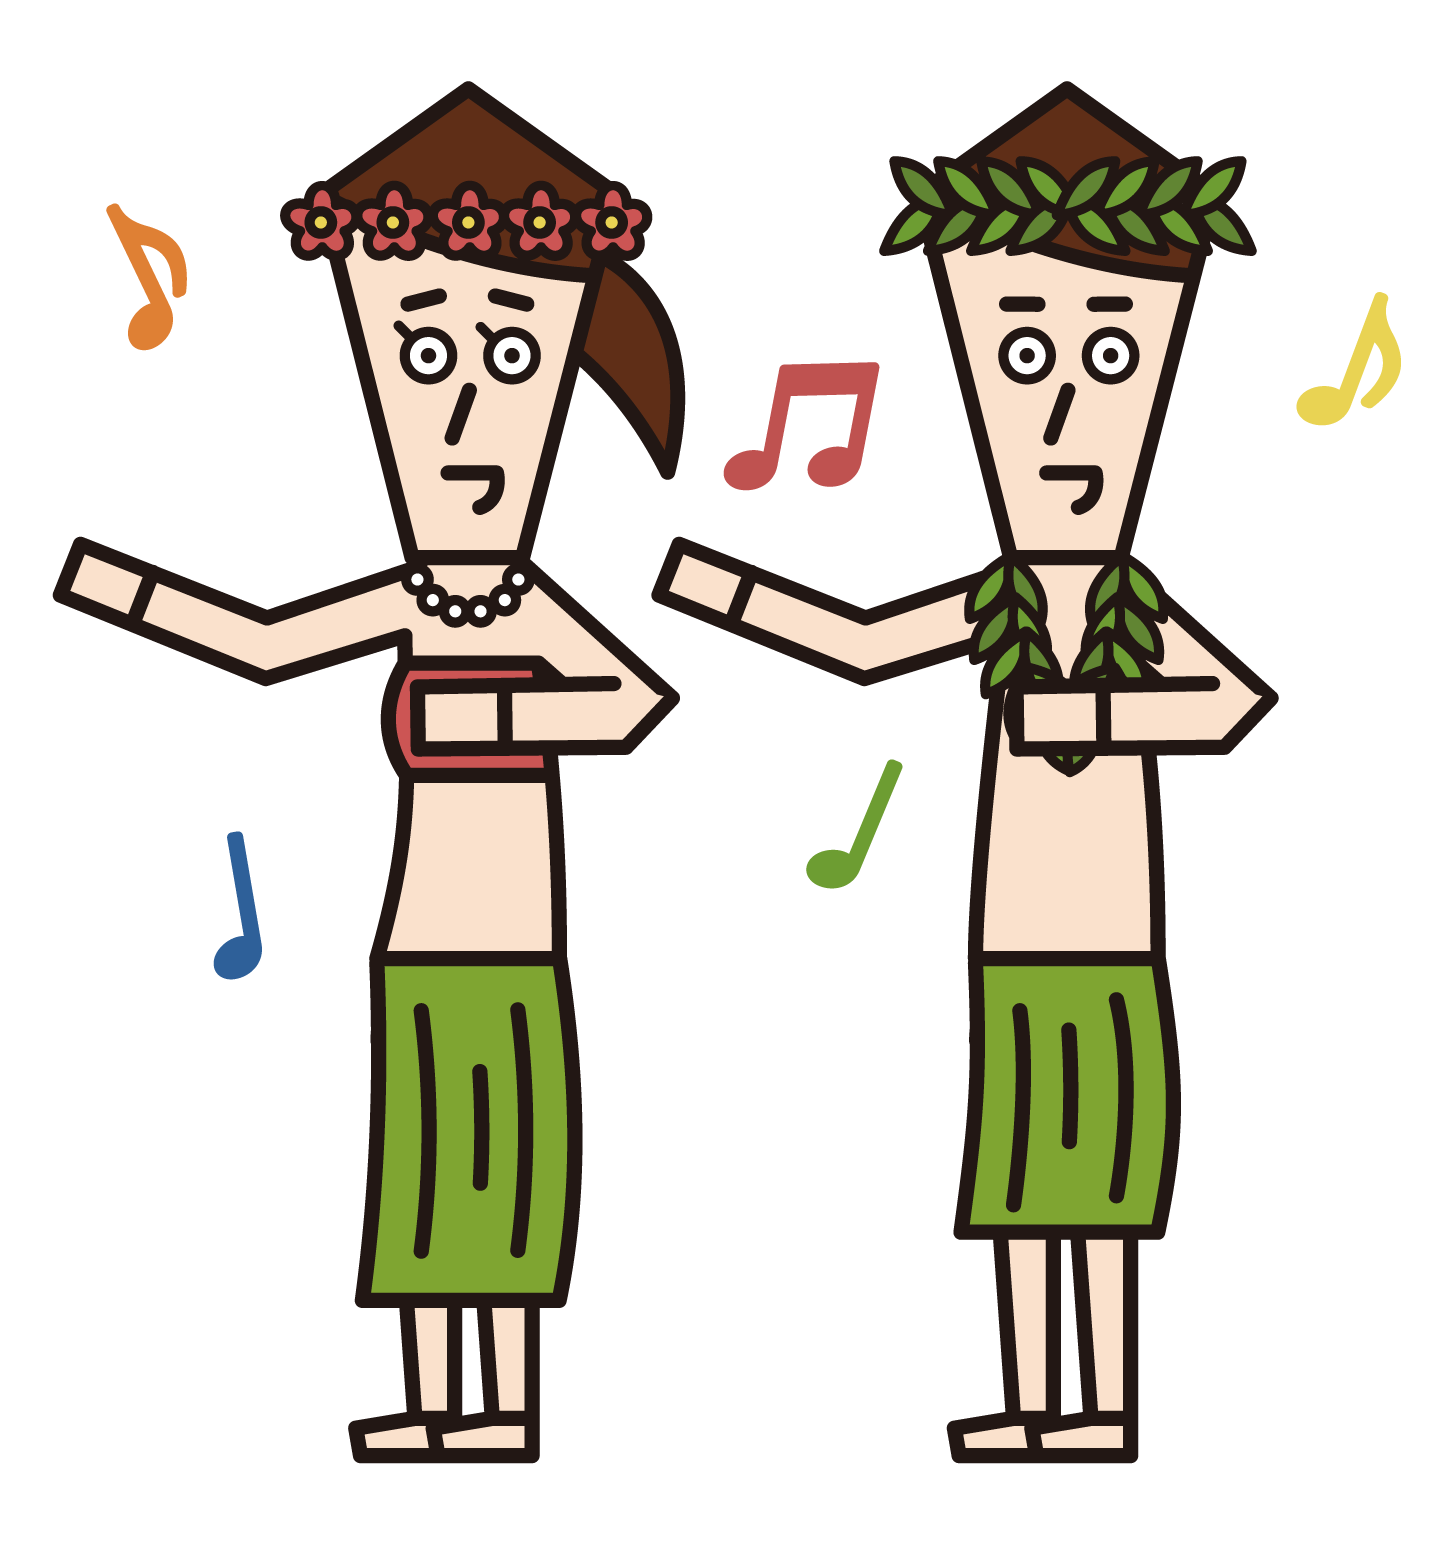 Illustrations of people dancing hula